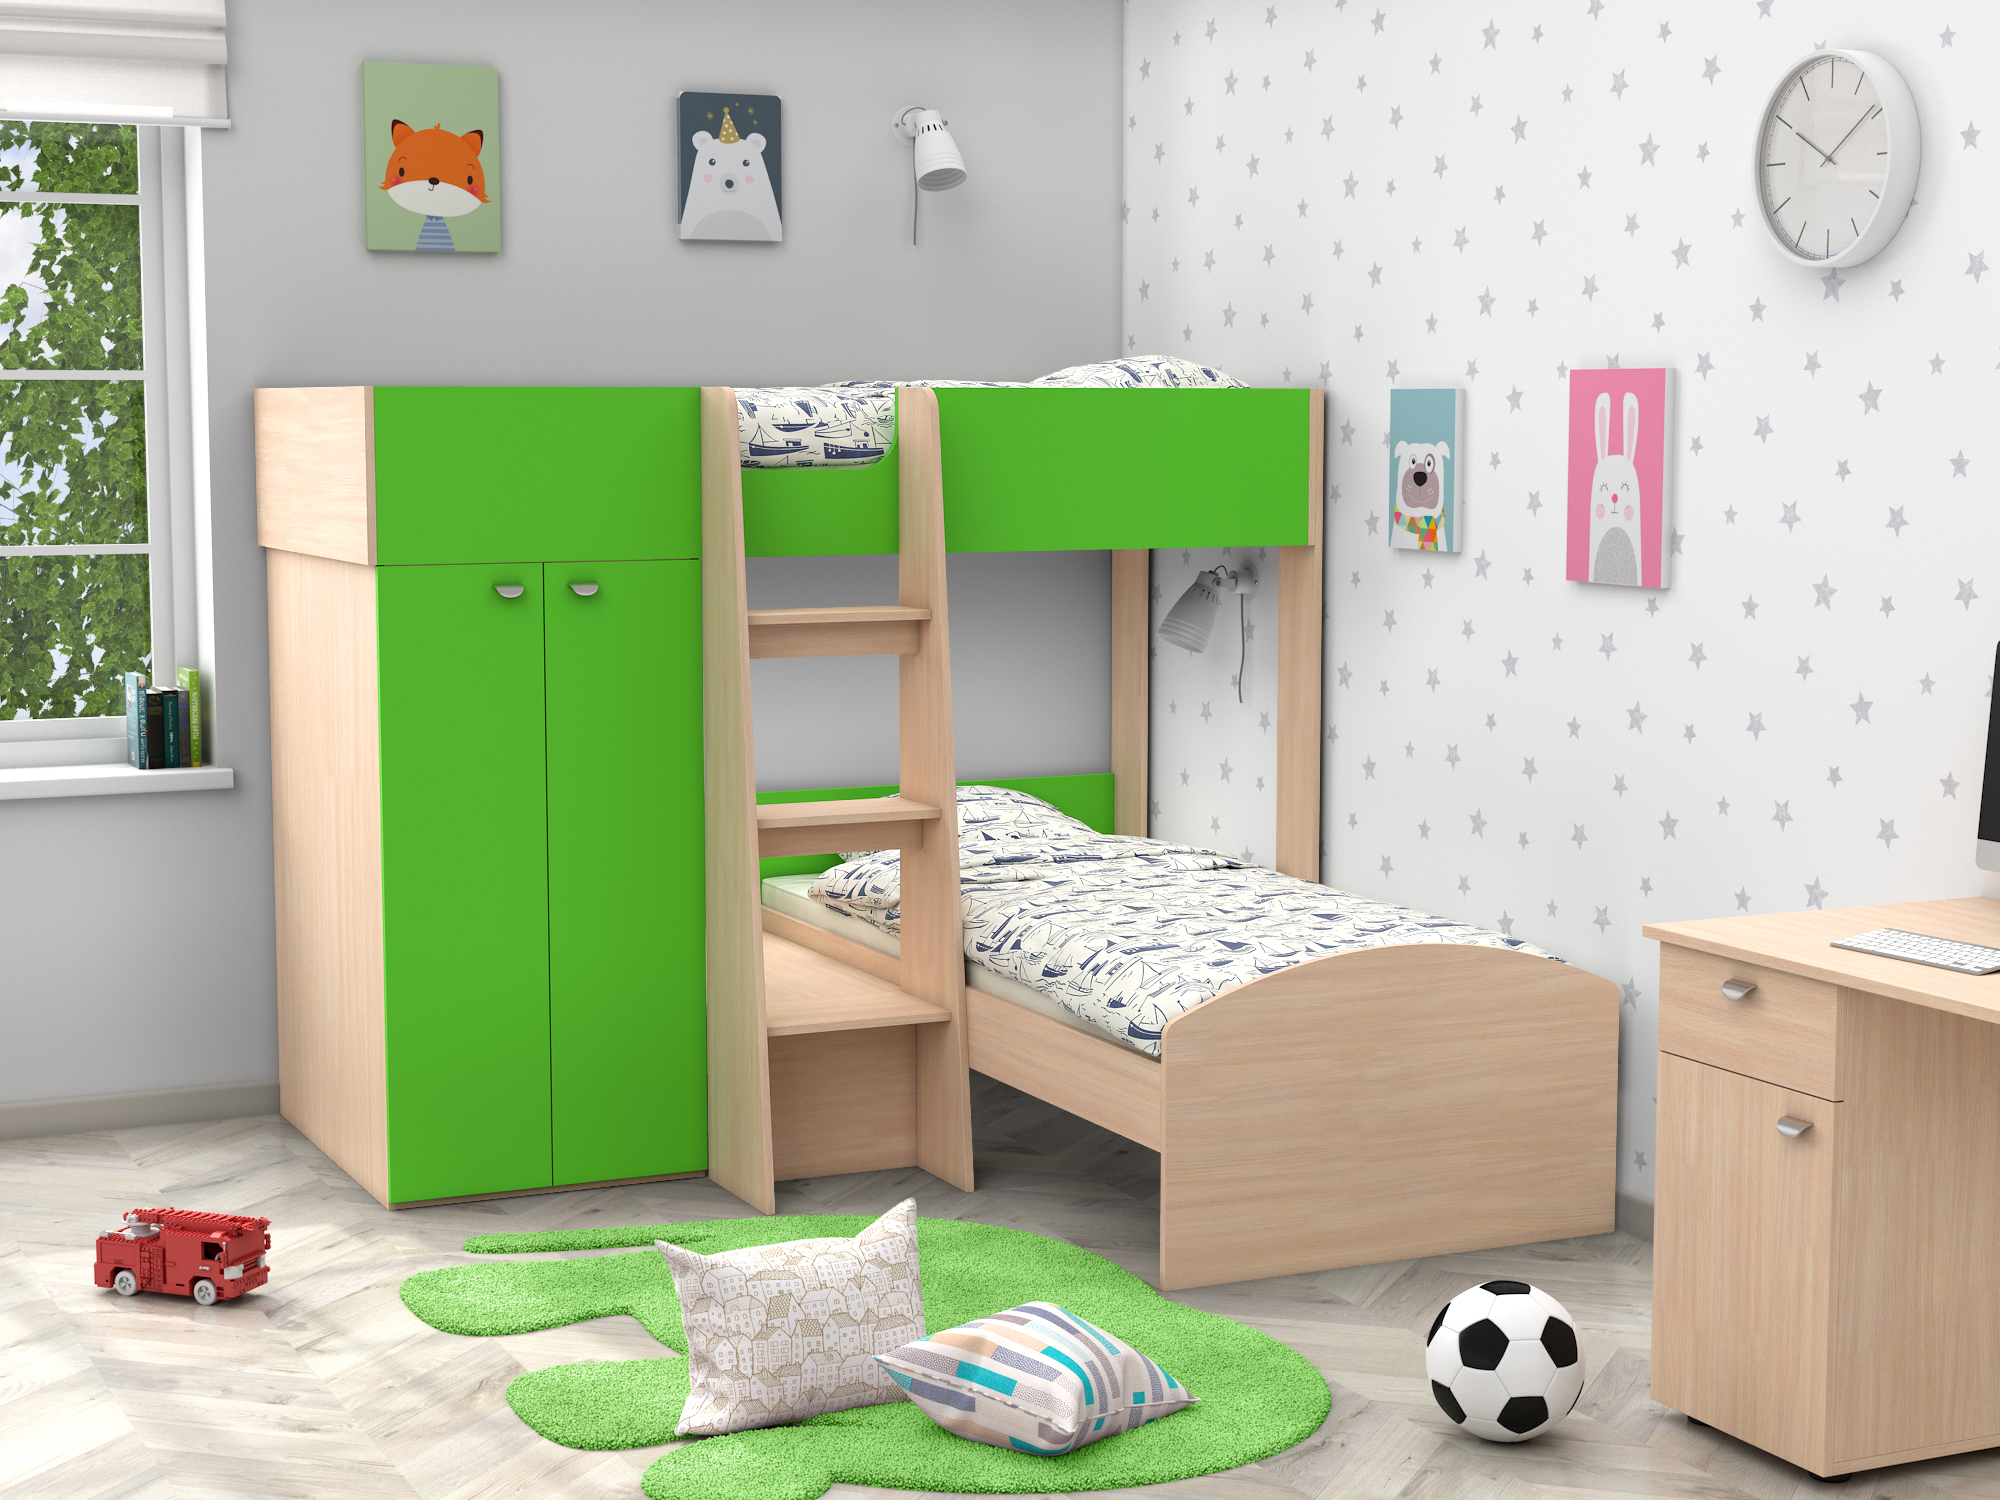 Двухъярусная кровать Golden Kids-4 (90х200) Зеленый, Белый, Бежевый, ЛДСП двухъярусная кровать golden kids 4 90х200 голубой бежевый лдсп